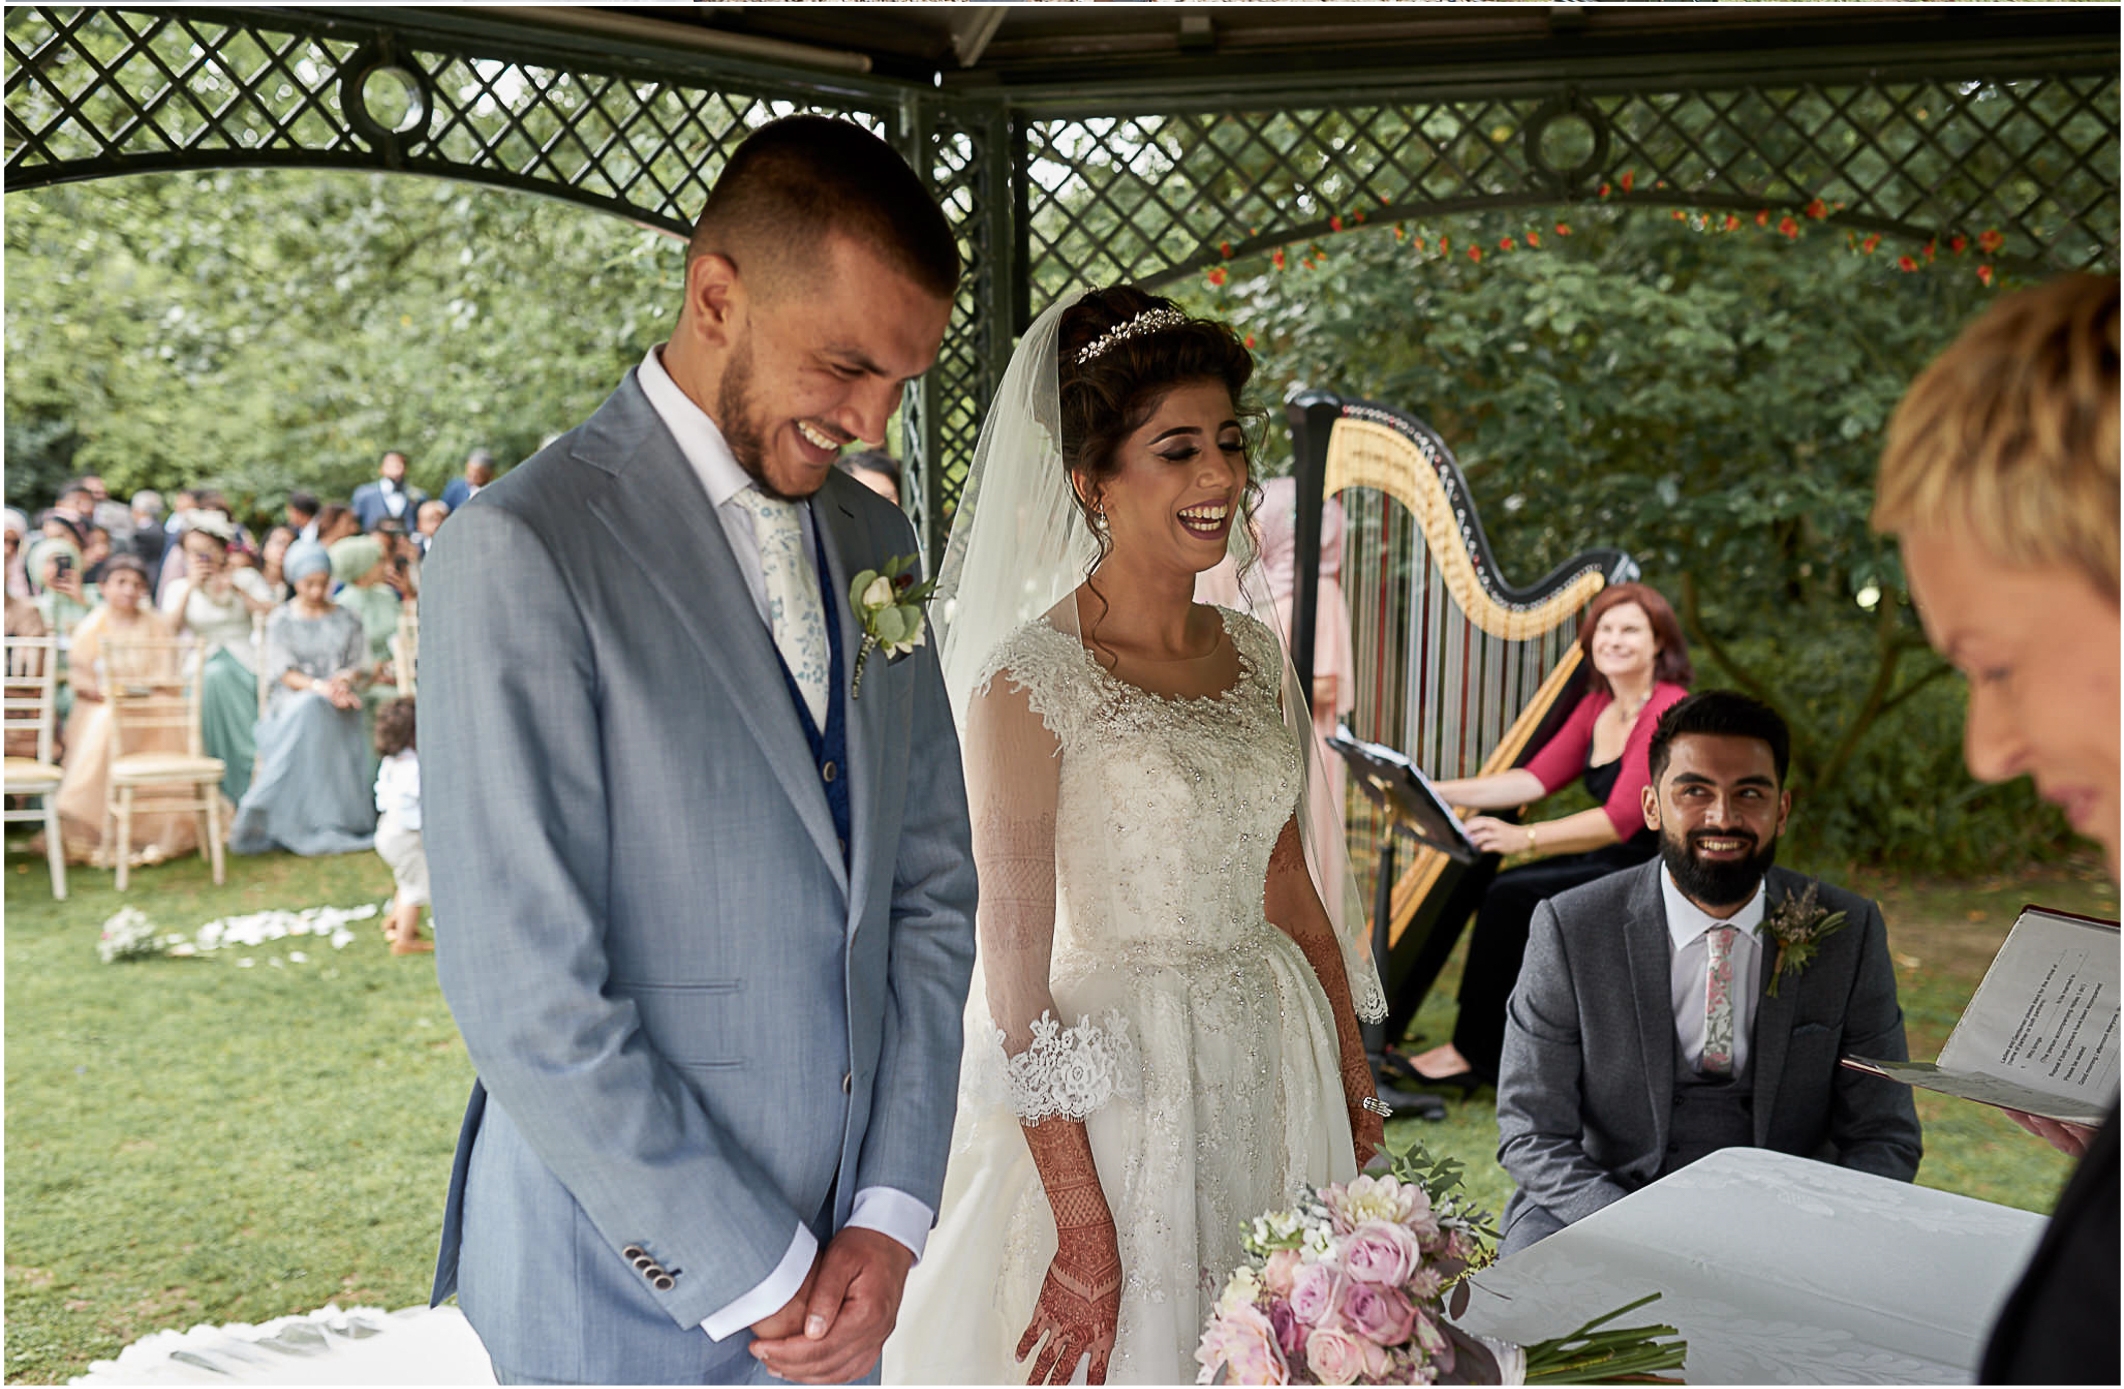 Muslim Civil Wedding Photography-15b.jpg